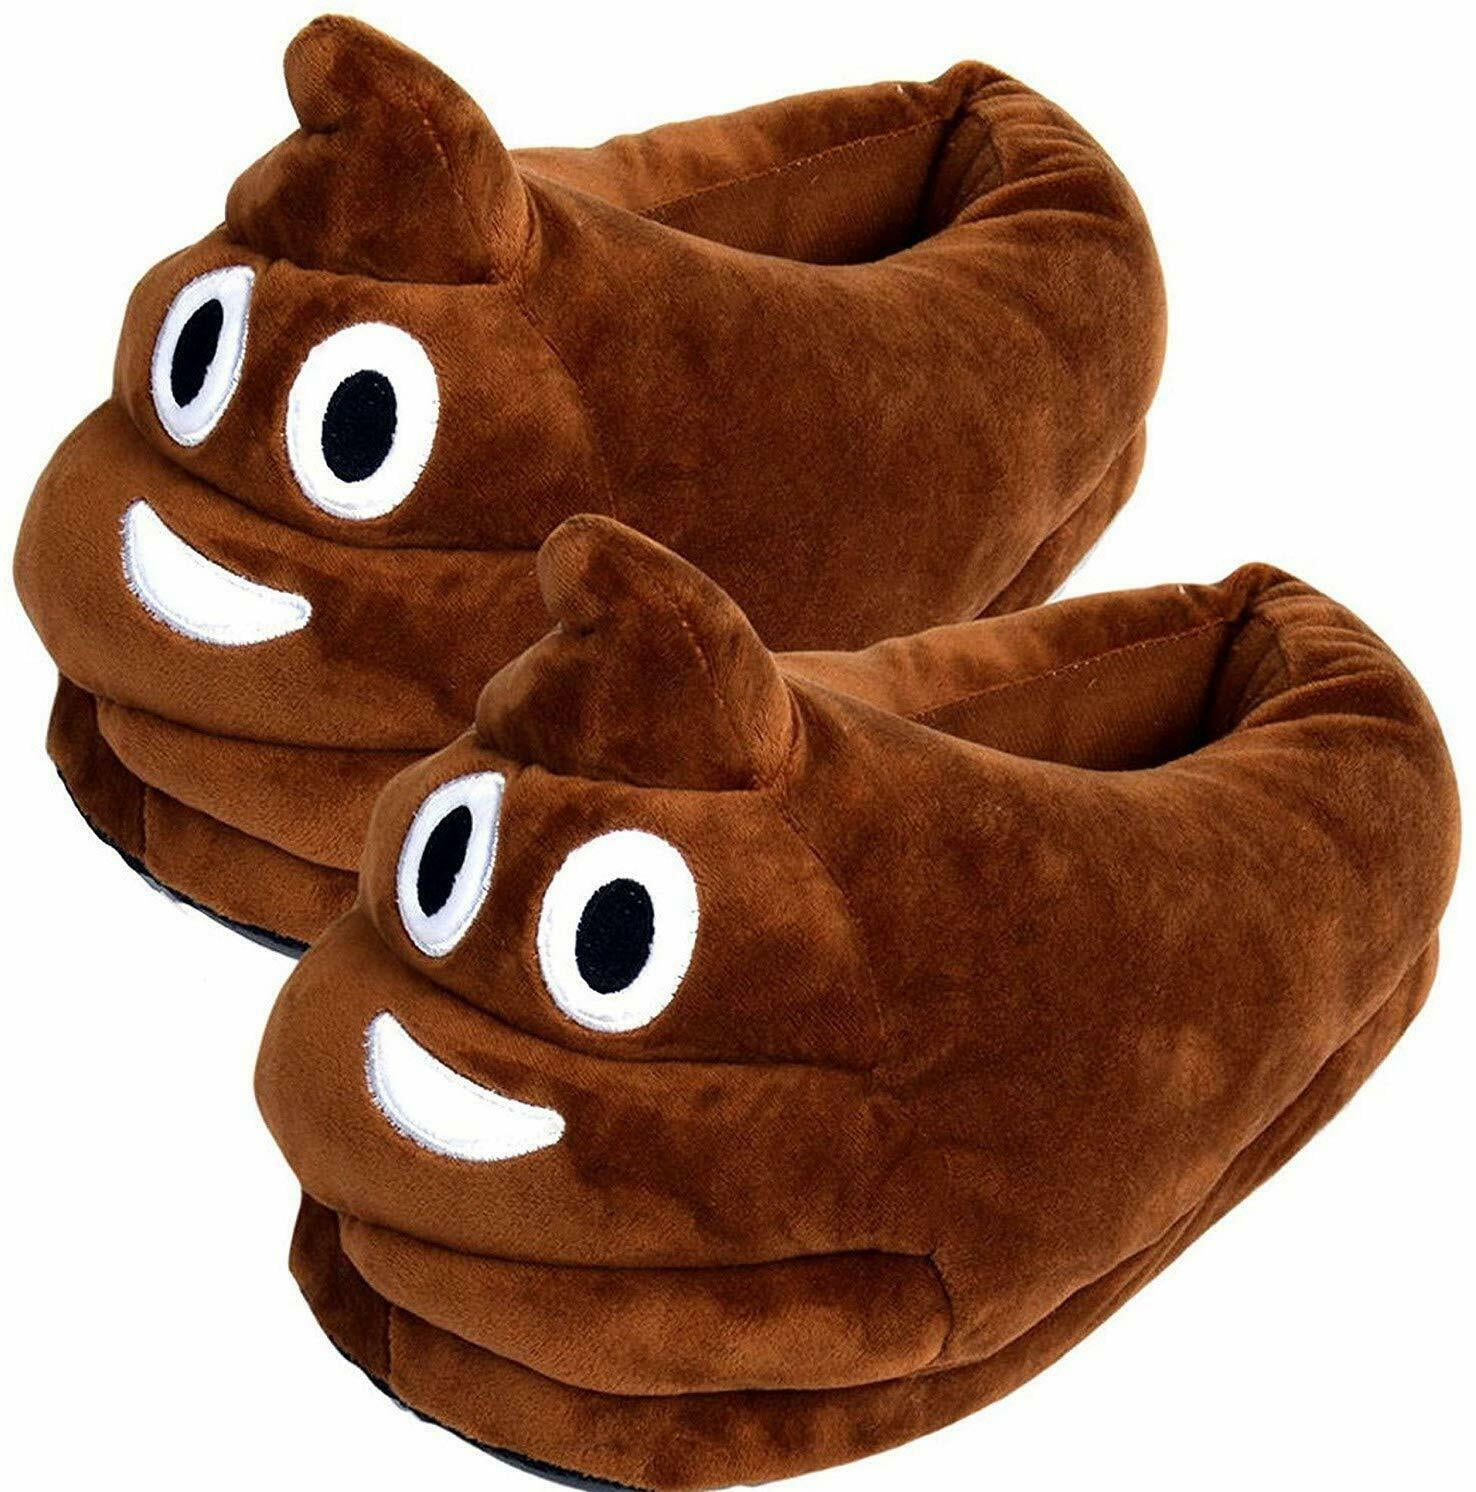 Emoji Slippers Poop Plush Cotton Soft 